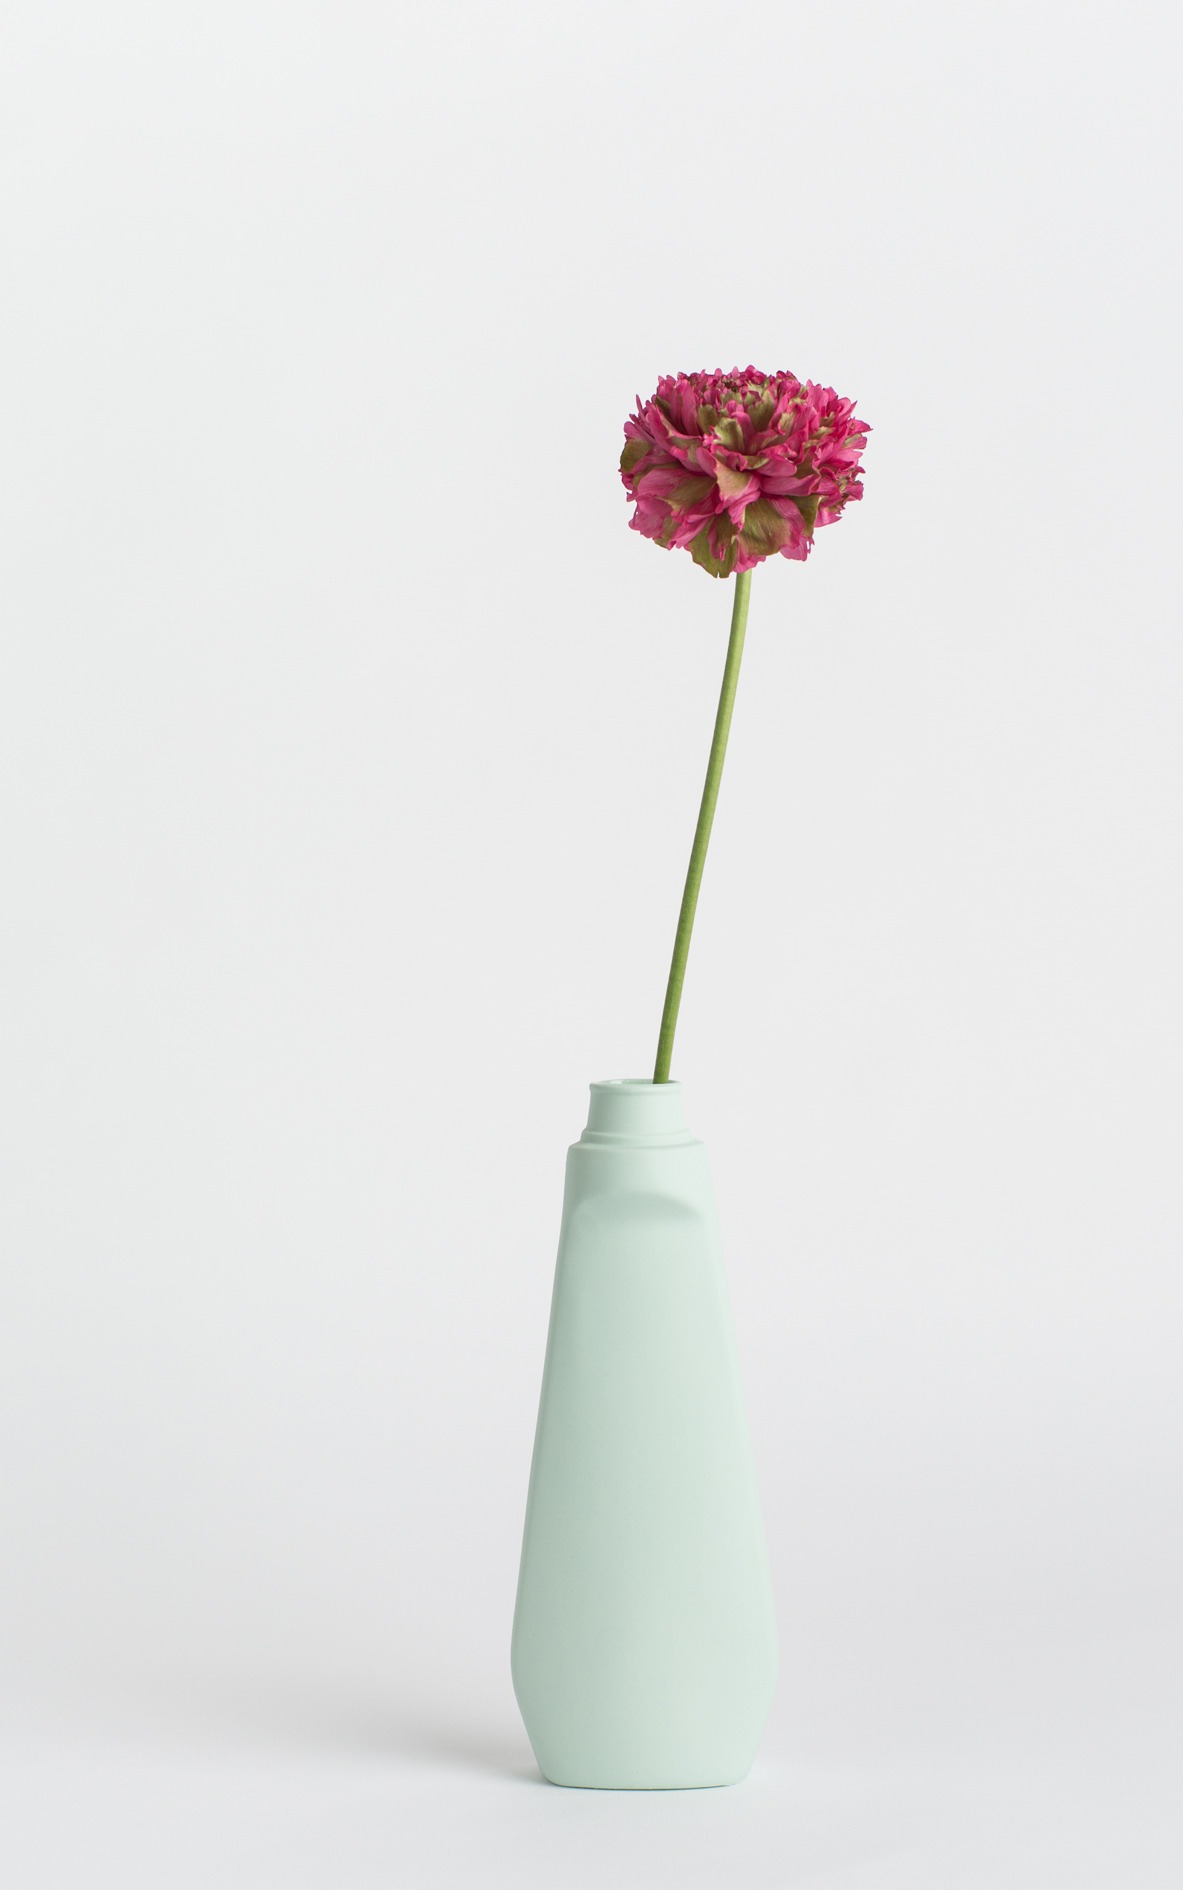 bottle vase #4 mint with flower